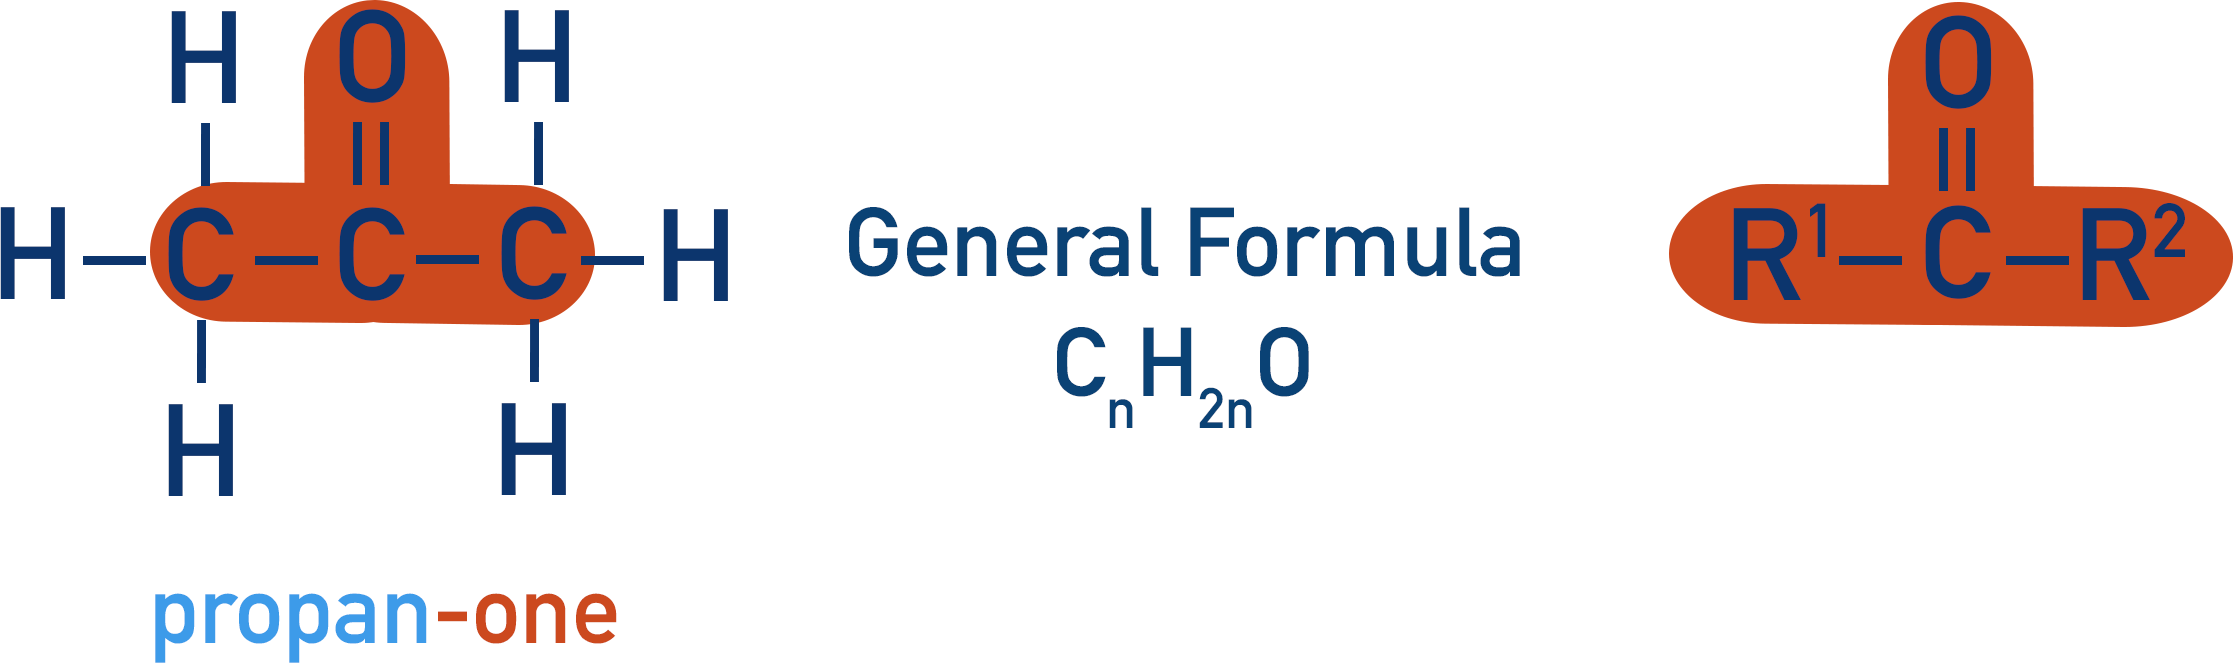 ketone functional group general formula ethanone